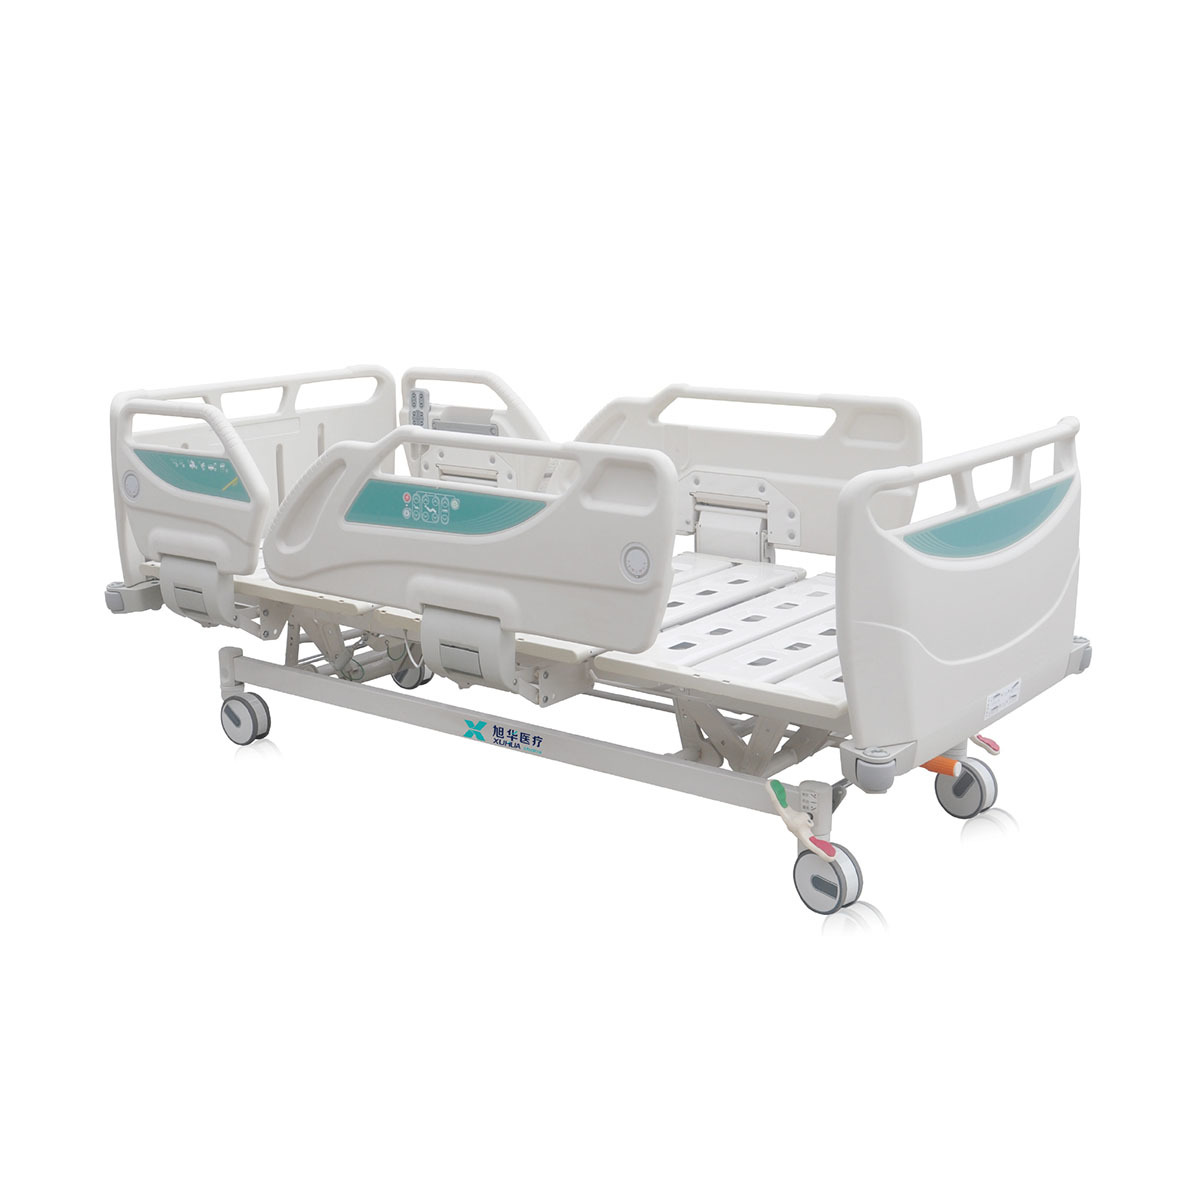 HL-B117B TYPE Ⅱ Electric Hospital Bed